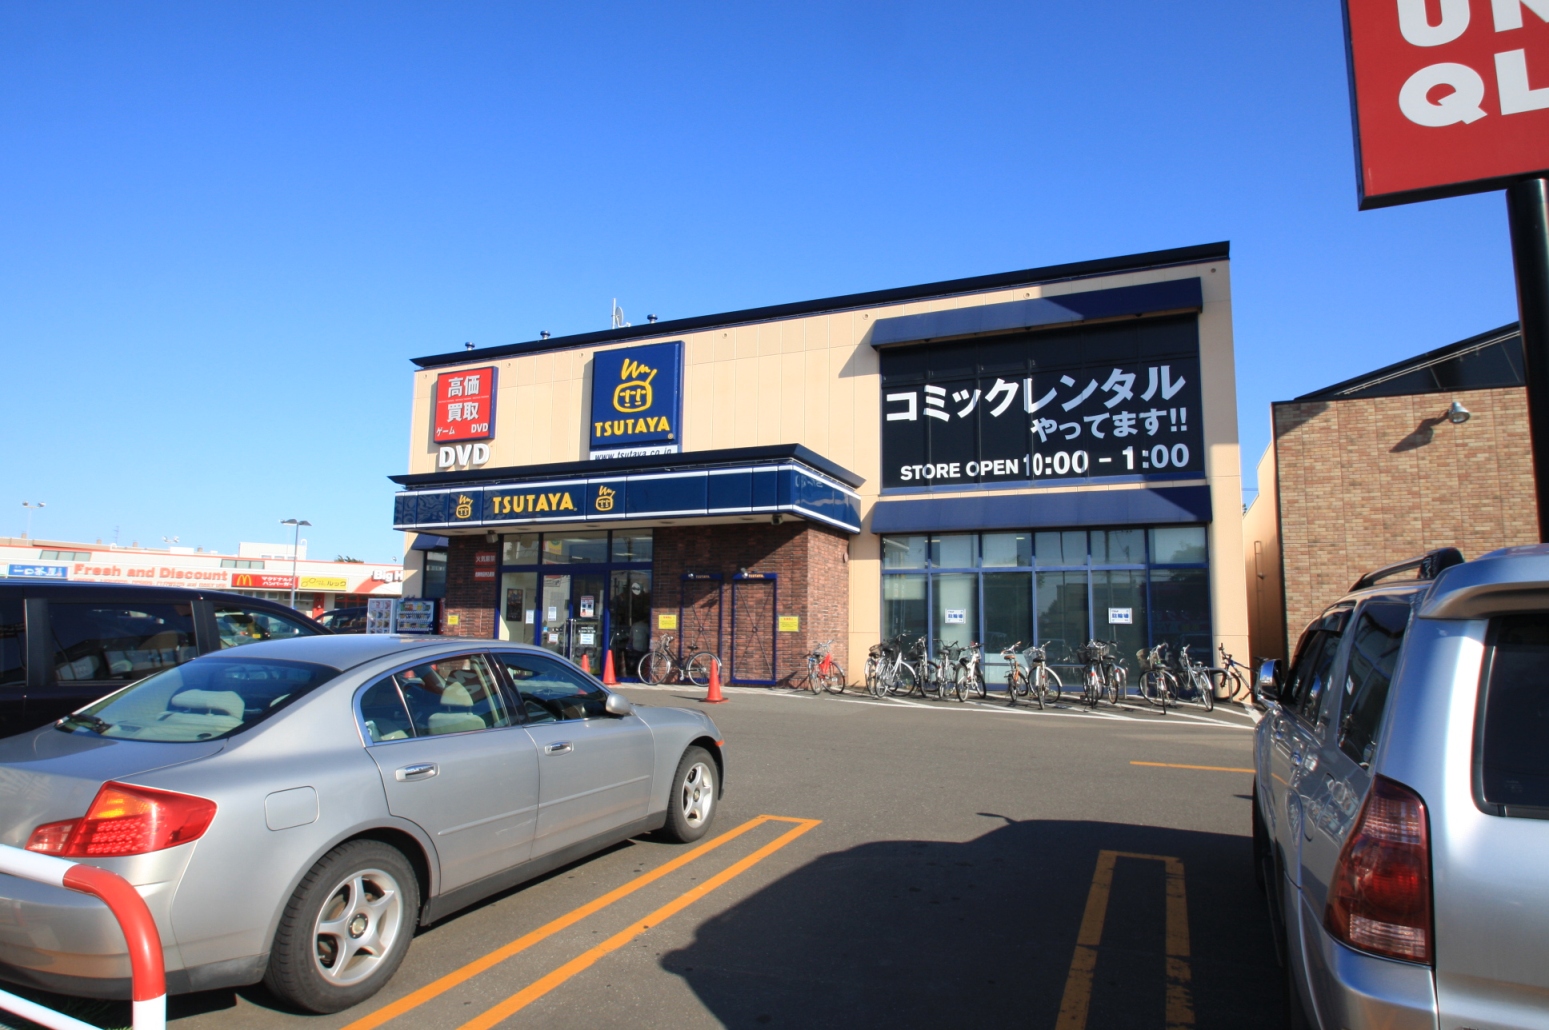 Shopping centre. Uniqlo Hibarigaoka Town Plaza store until the (shopping center) 968m